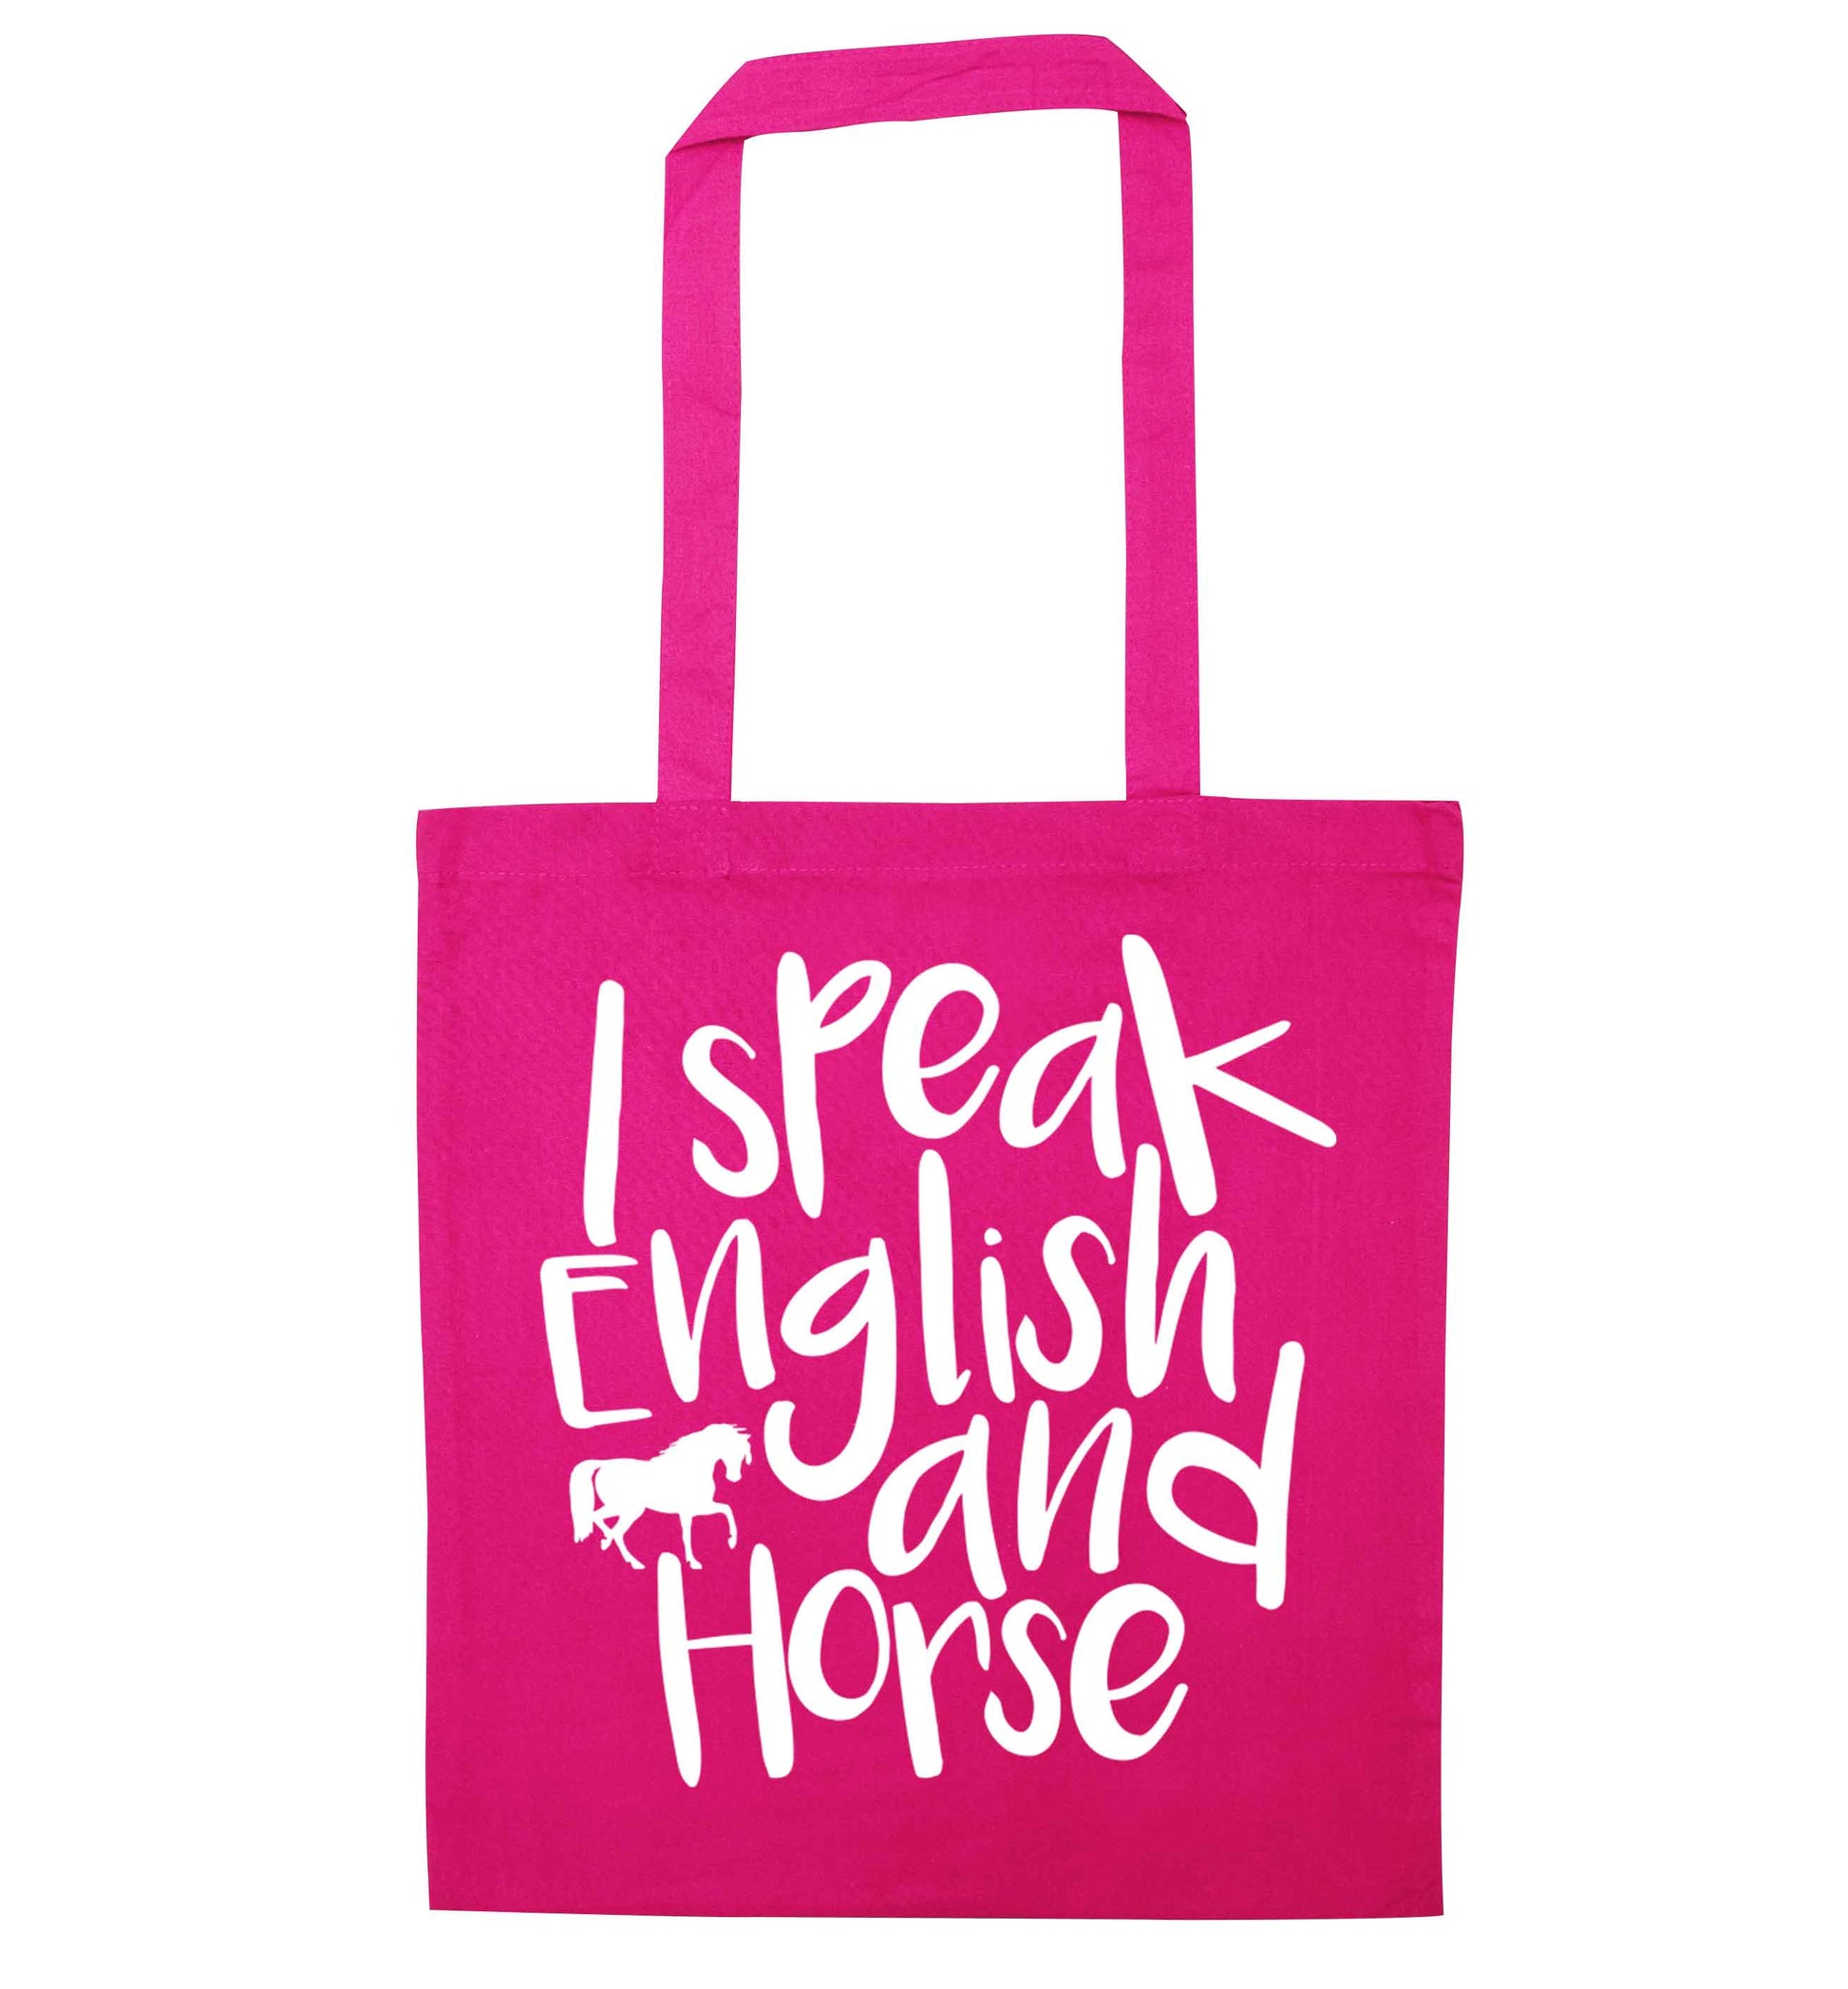 I speak English and horse pink tote bag